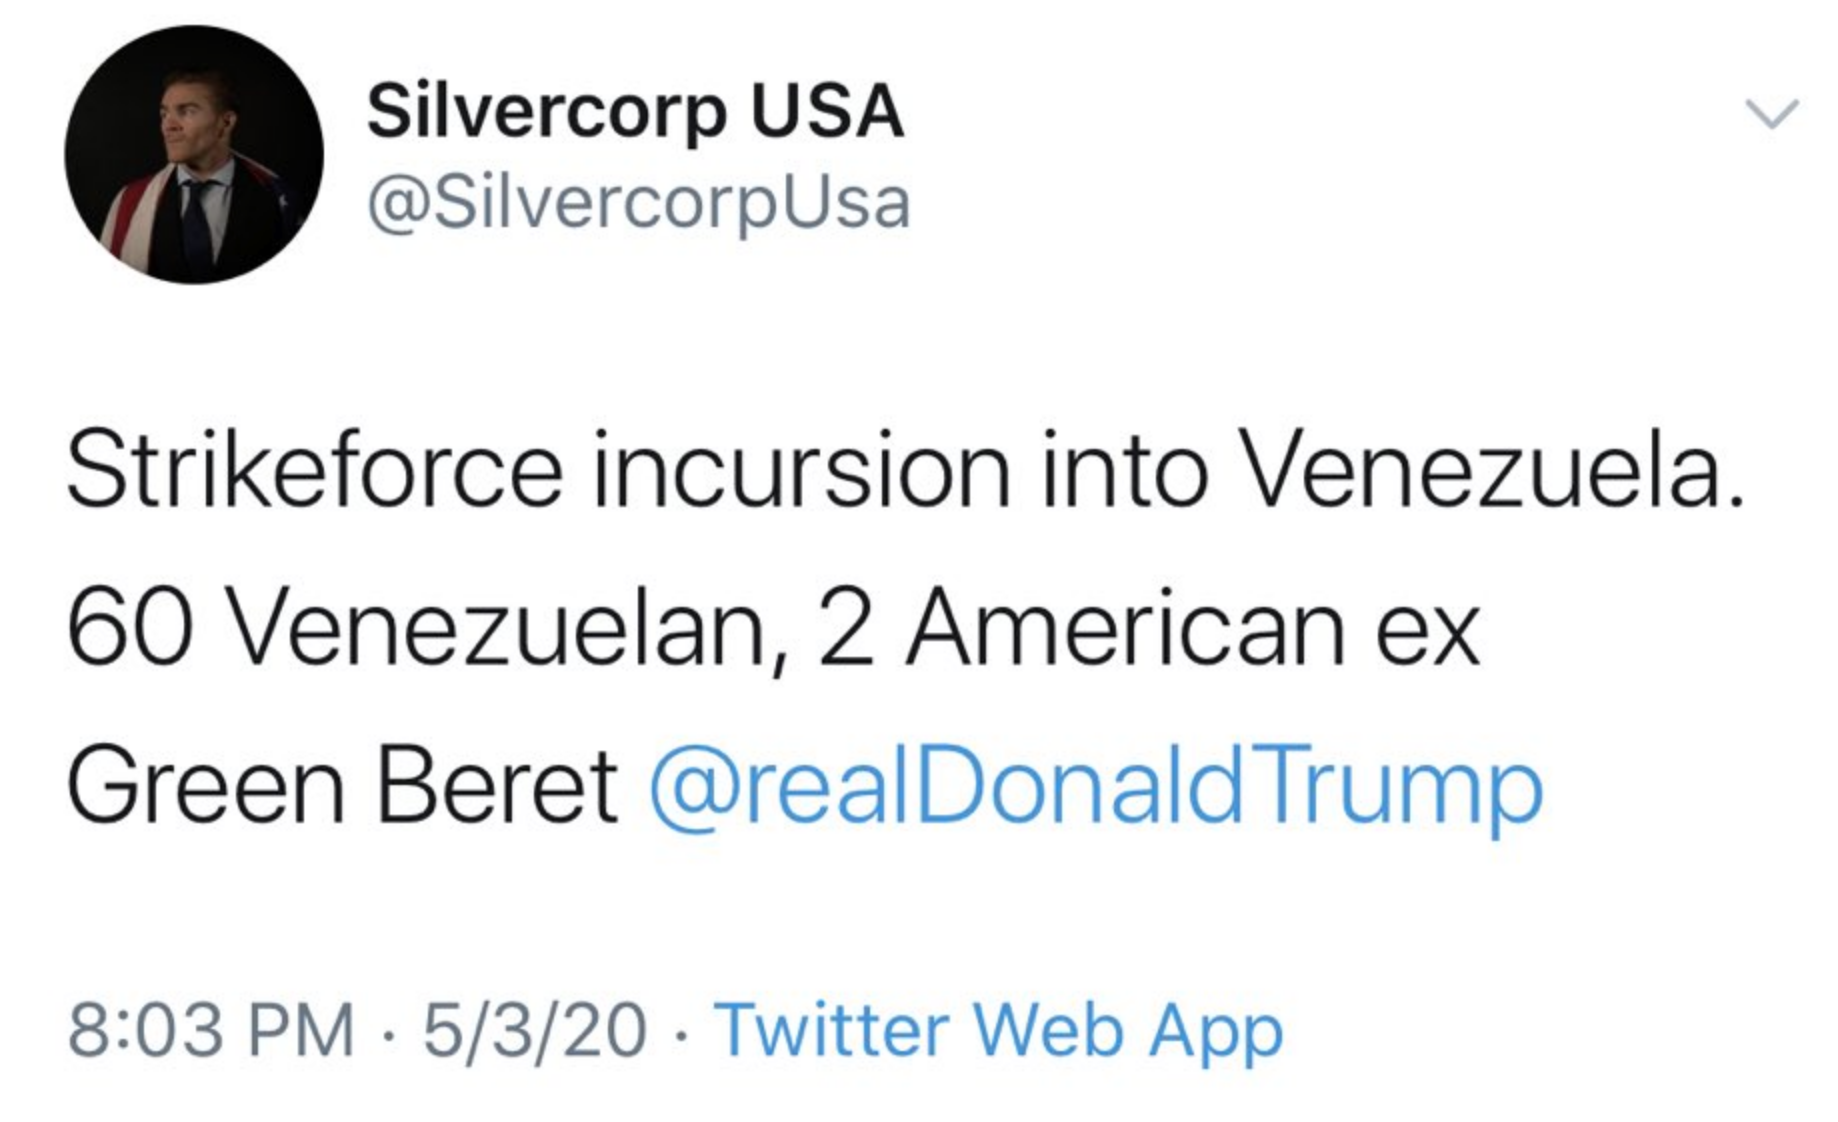 Jordan Goudreau announces coup in Venezuela, copies Donald Trump.